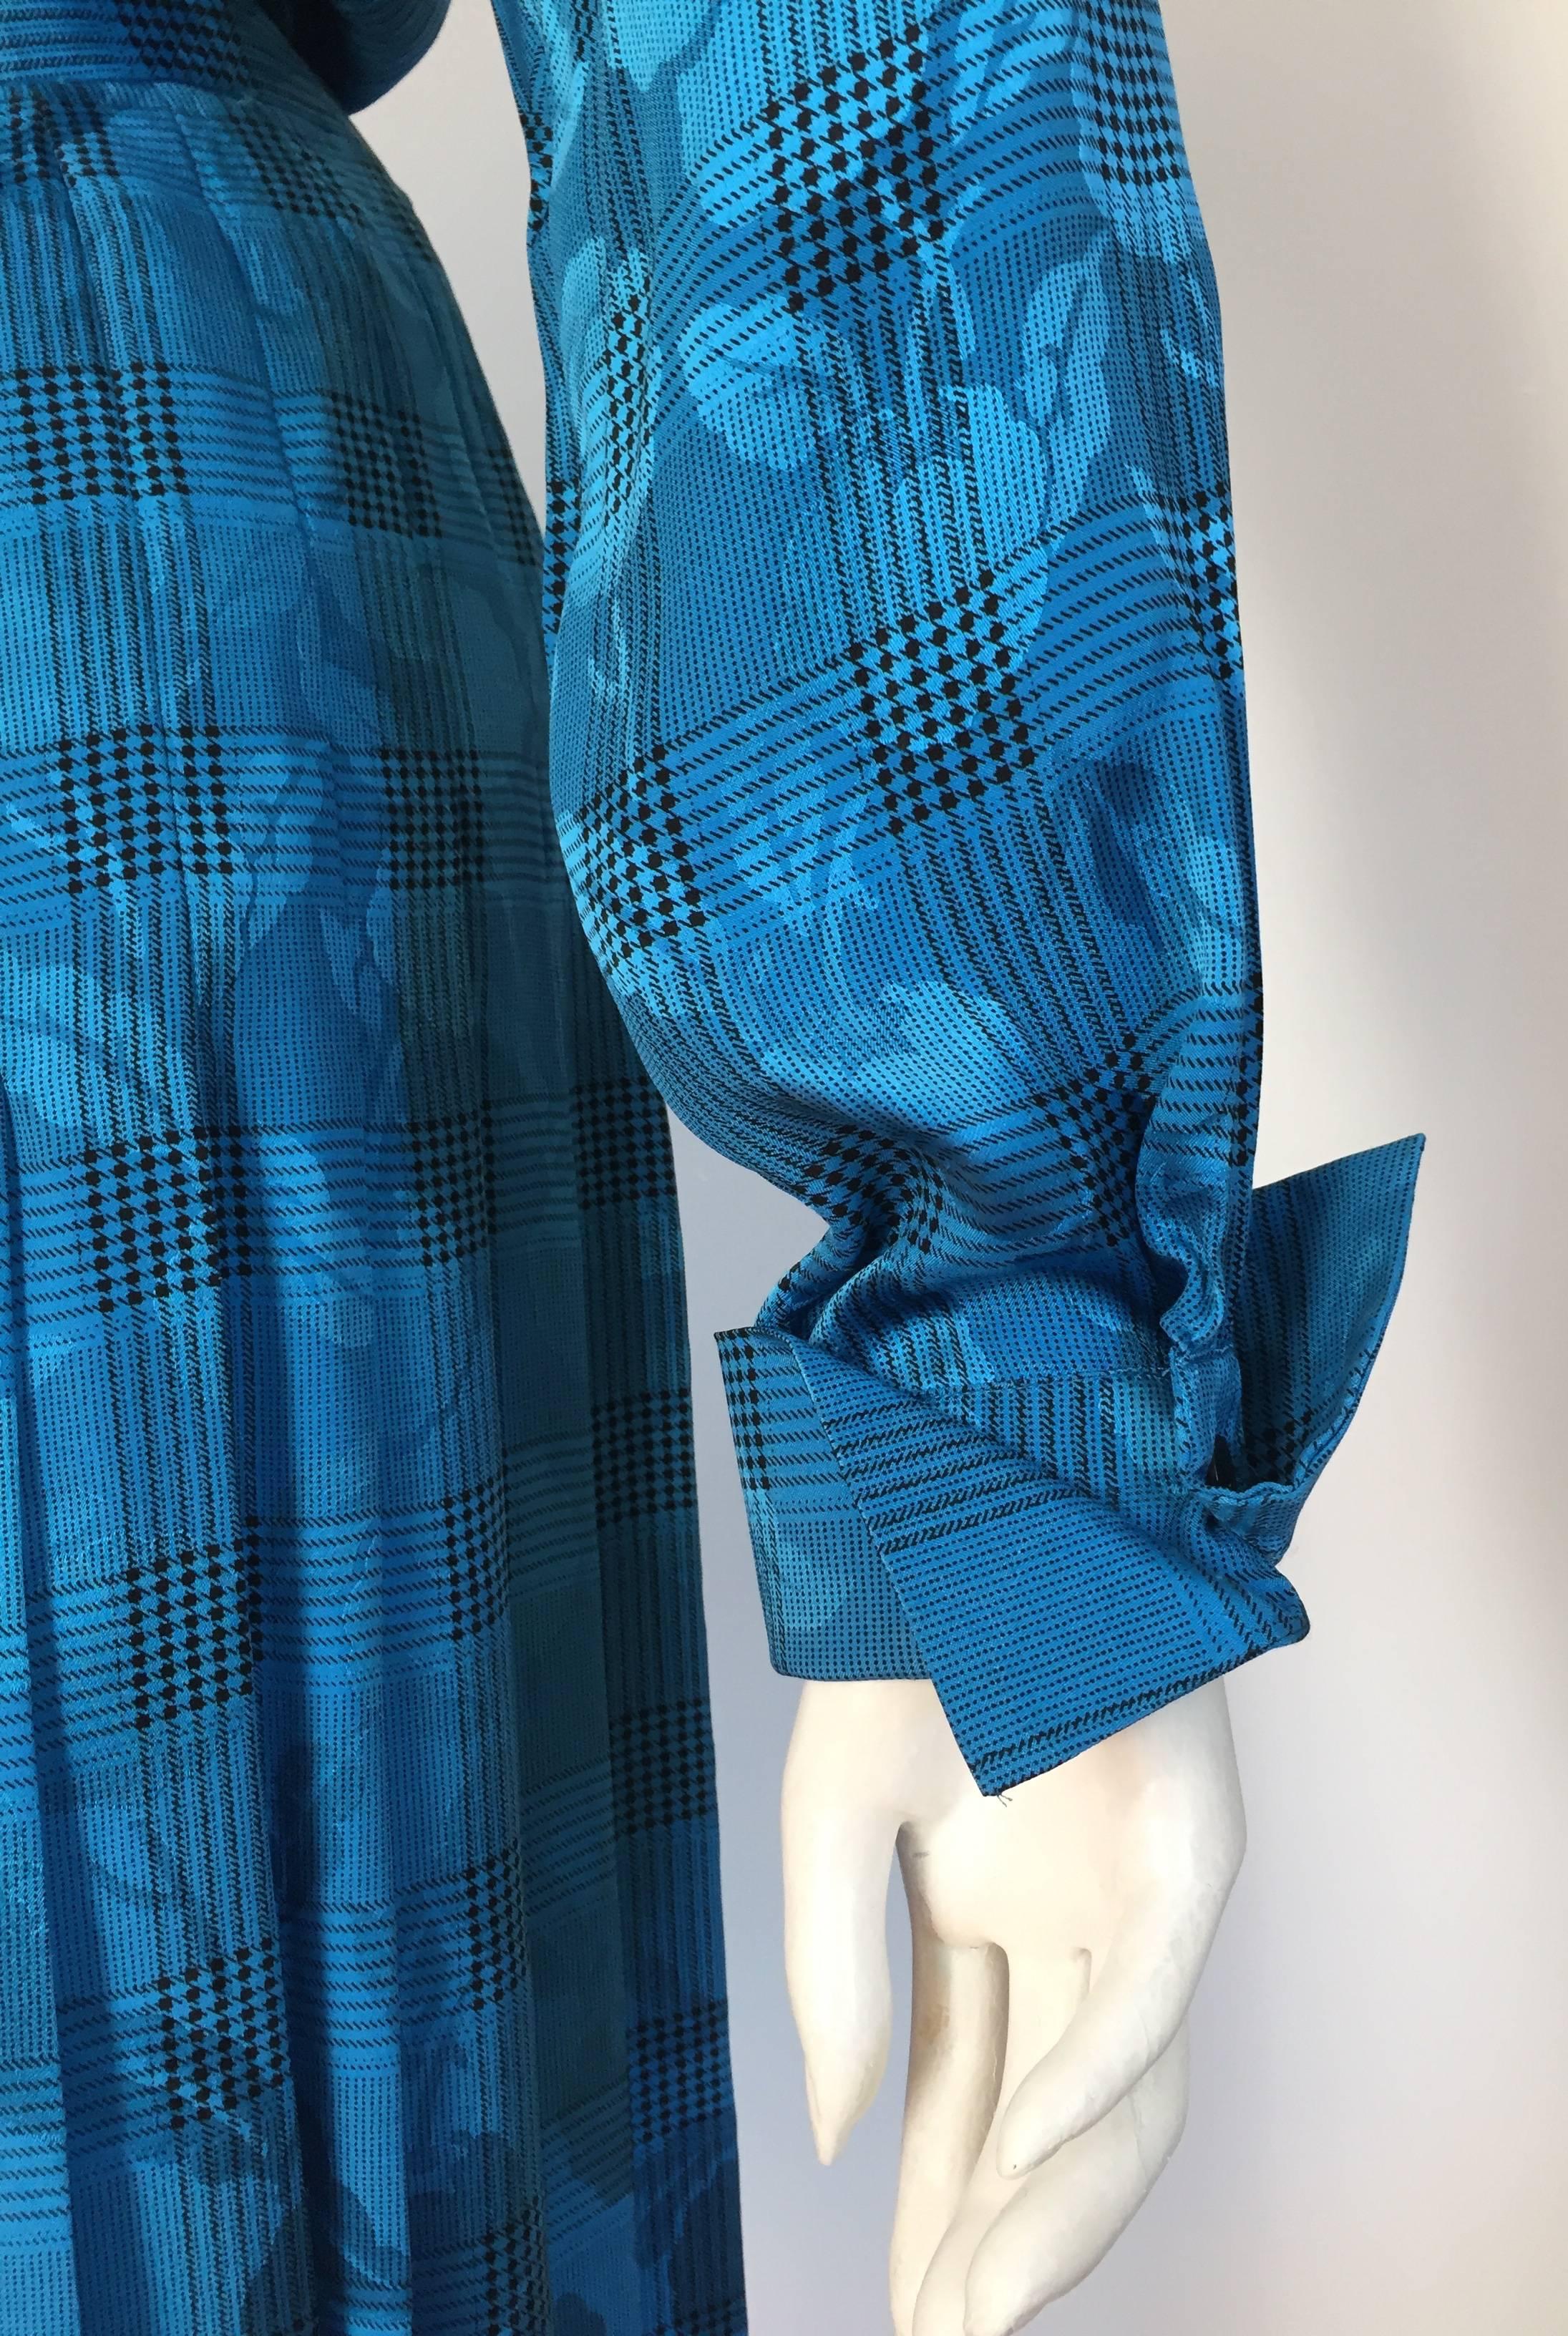 Women's Oscar de la Renta 80s silk blouse & skirt size 4. For Sale